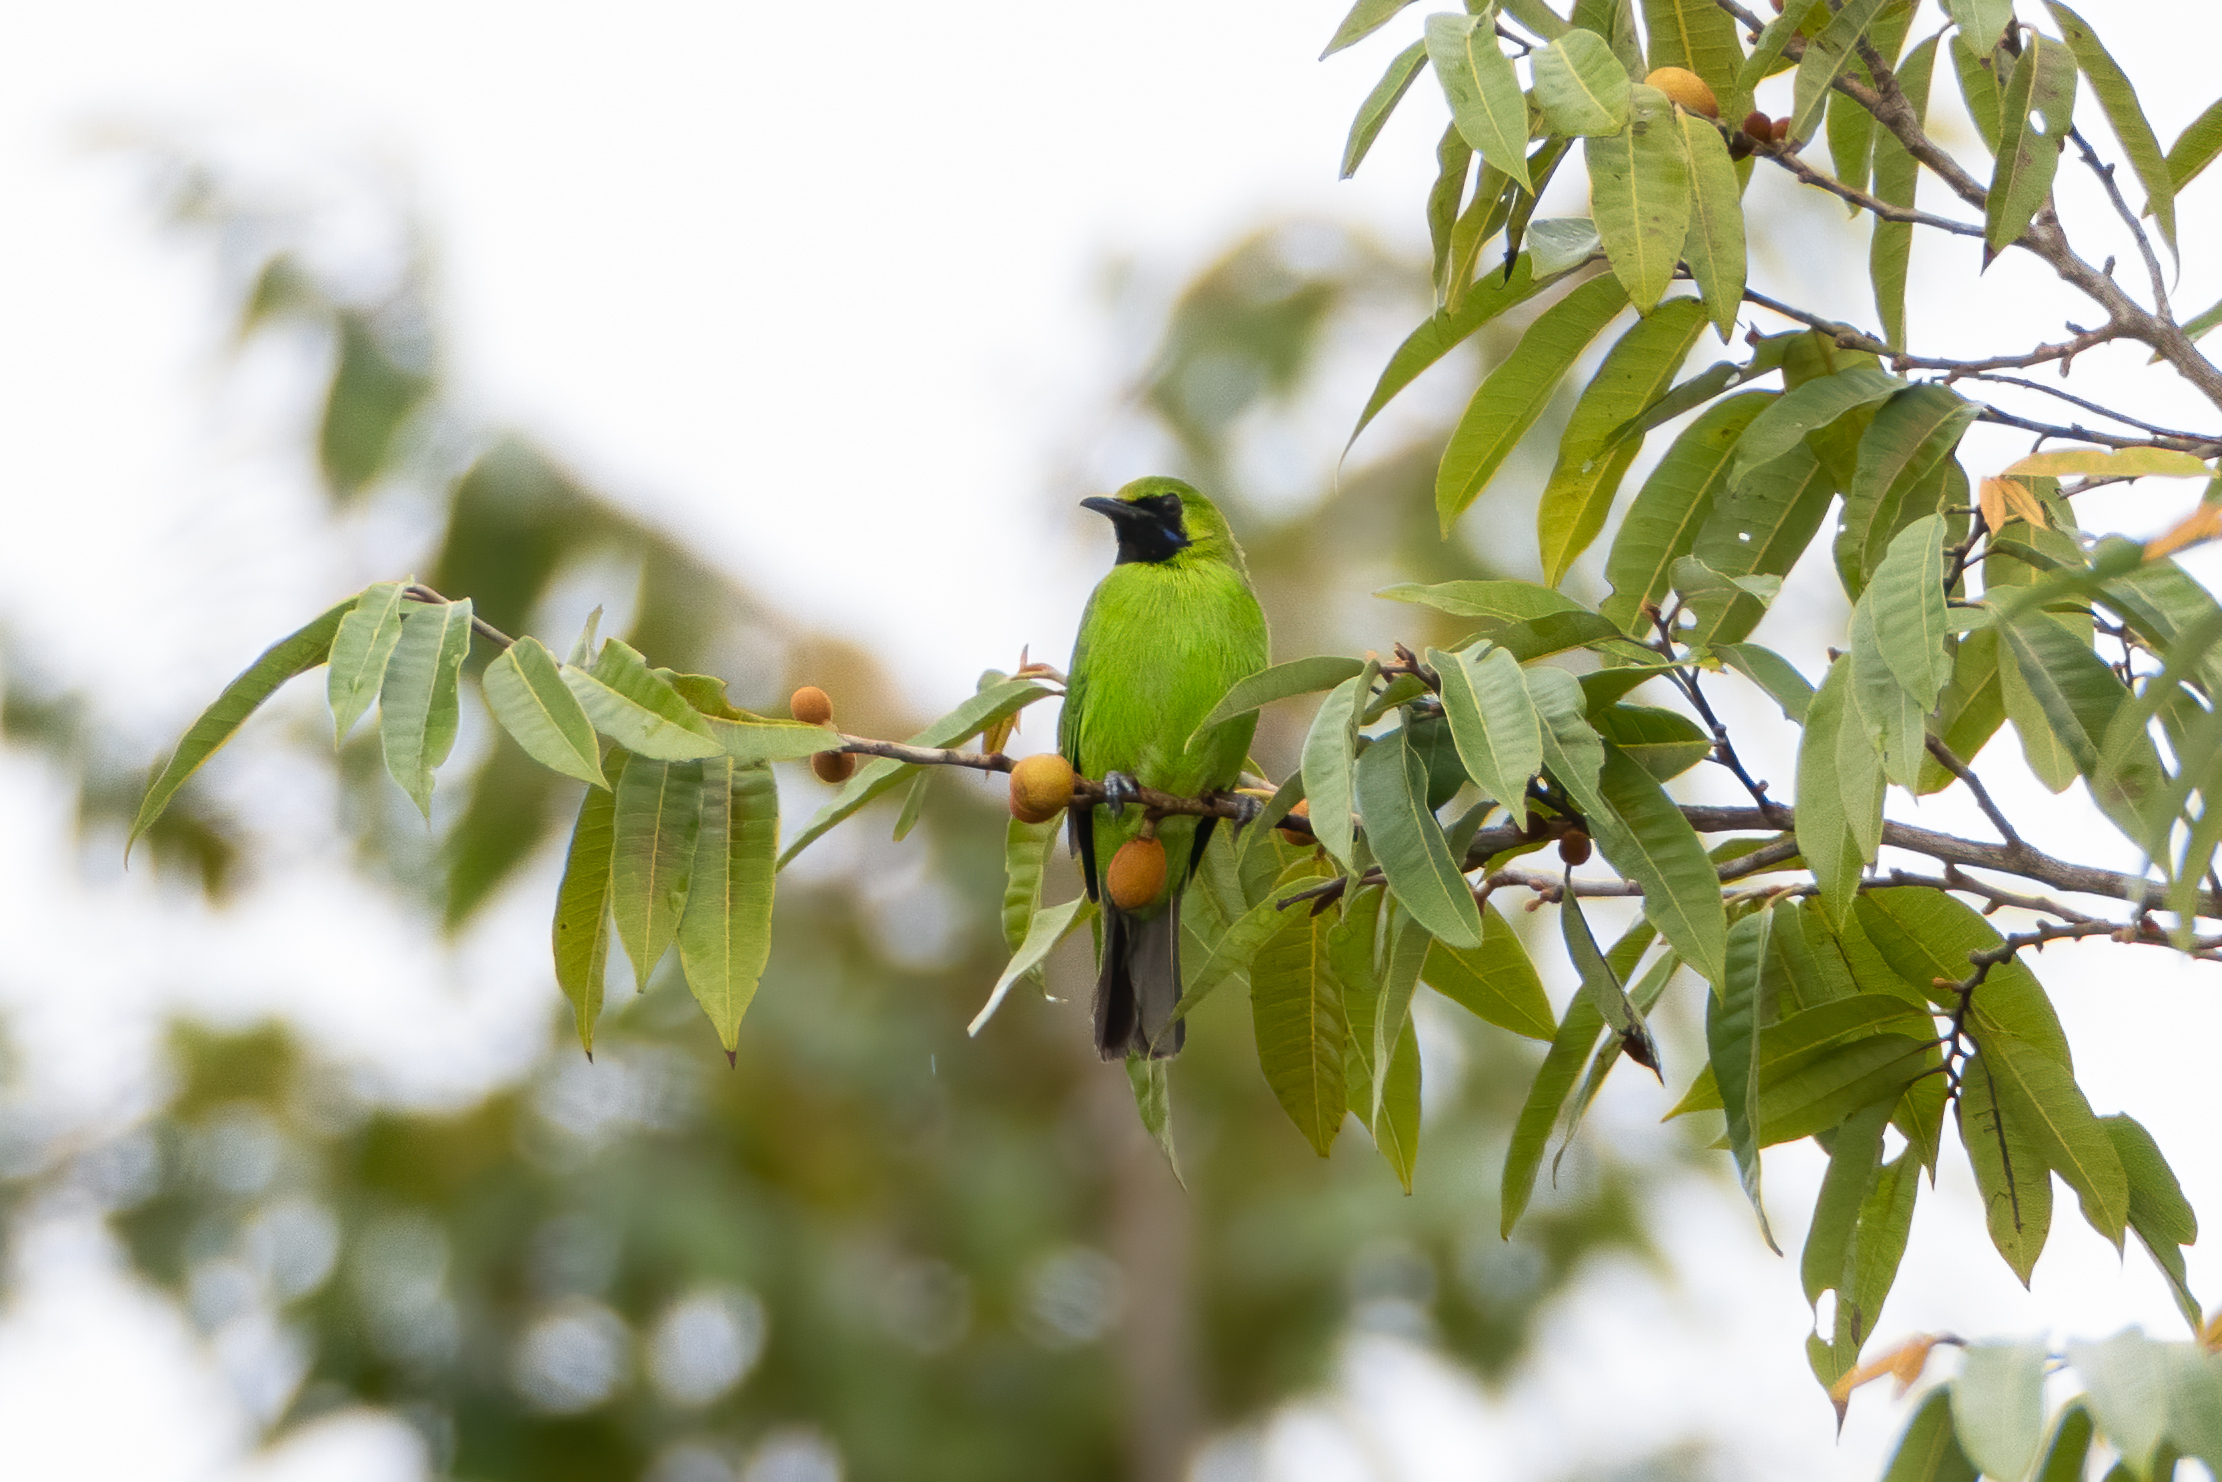 Lesser Green Leafbird at Chek Jawa Boardwalk on 3 May 2022. Photo credit: Adrian Silas Tay